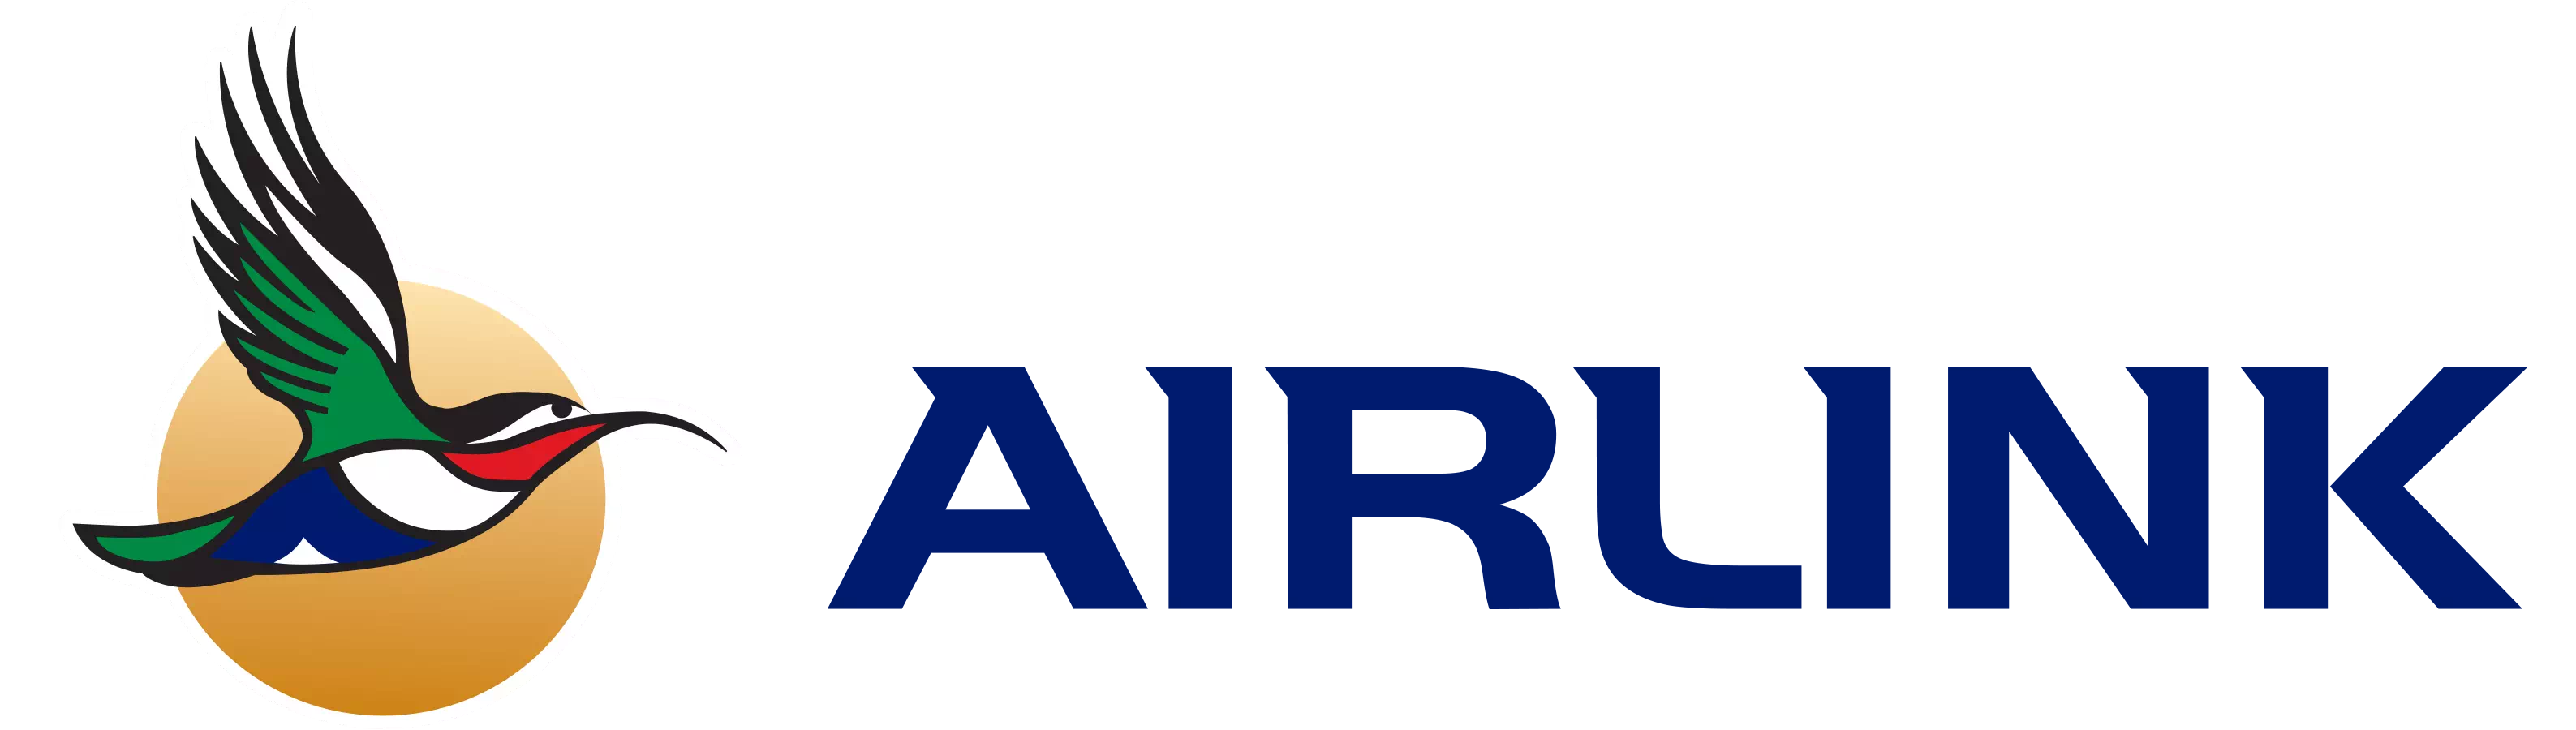 airlink_logo_sunbird